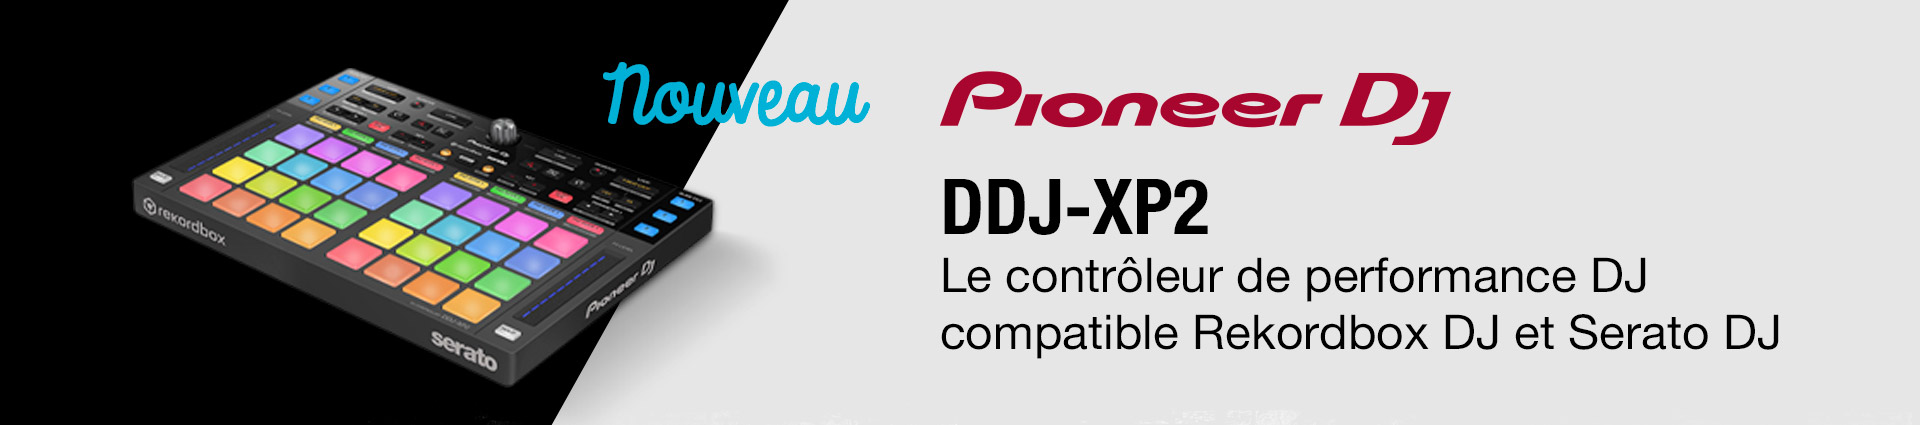 Controleur Pioneer DJ DDJ-XP2